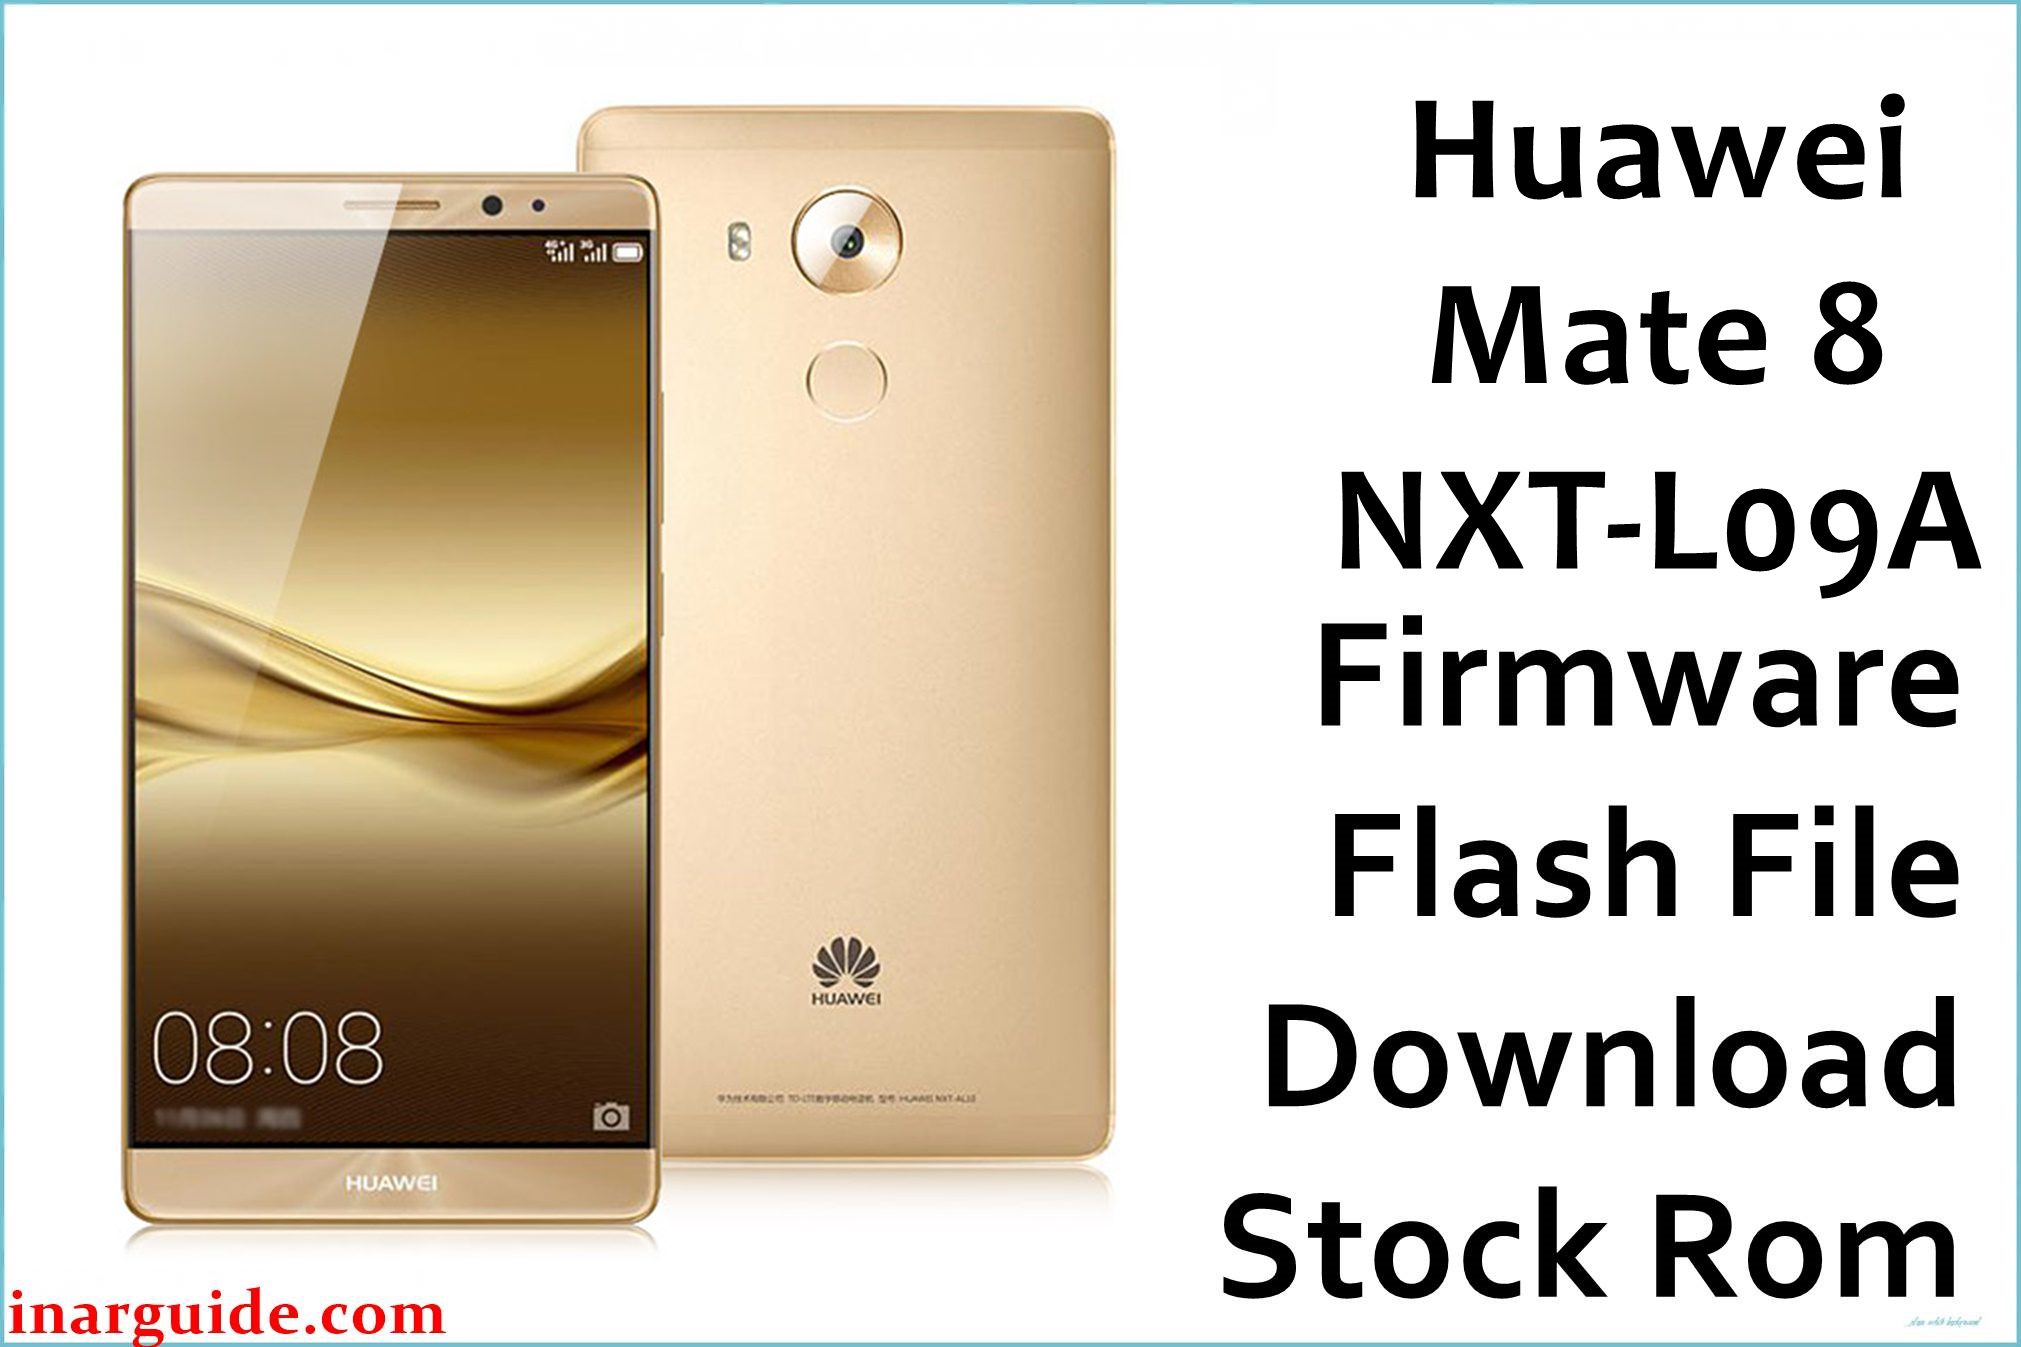 Goedaardig haakje venster Huawei Mate 8 NXT-L09A Firmware Flash File Download [Stock Rom] | Inar Guide